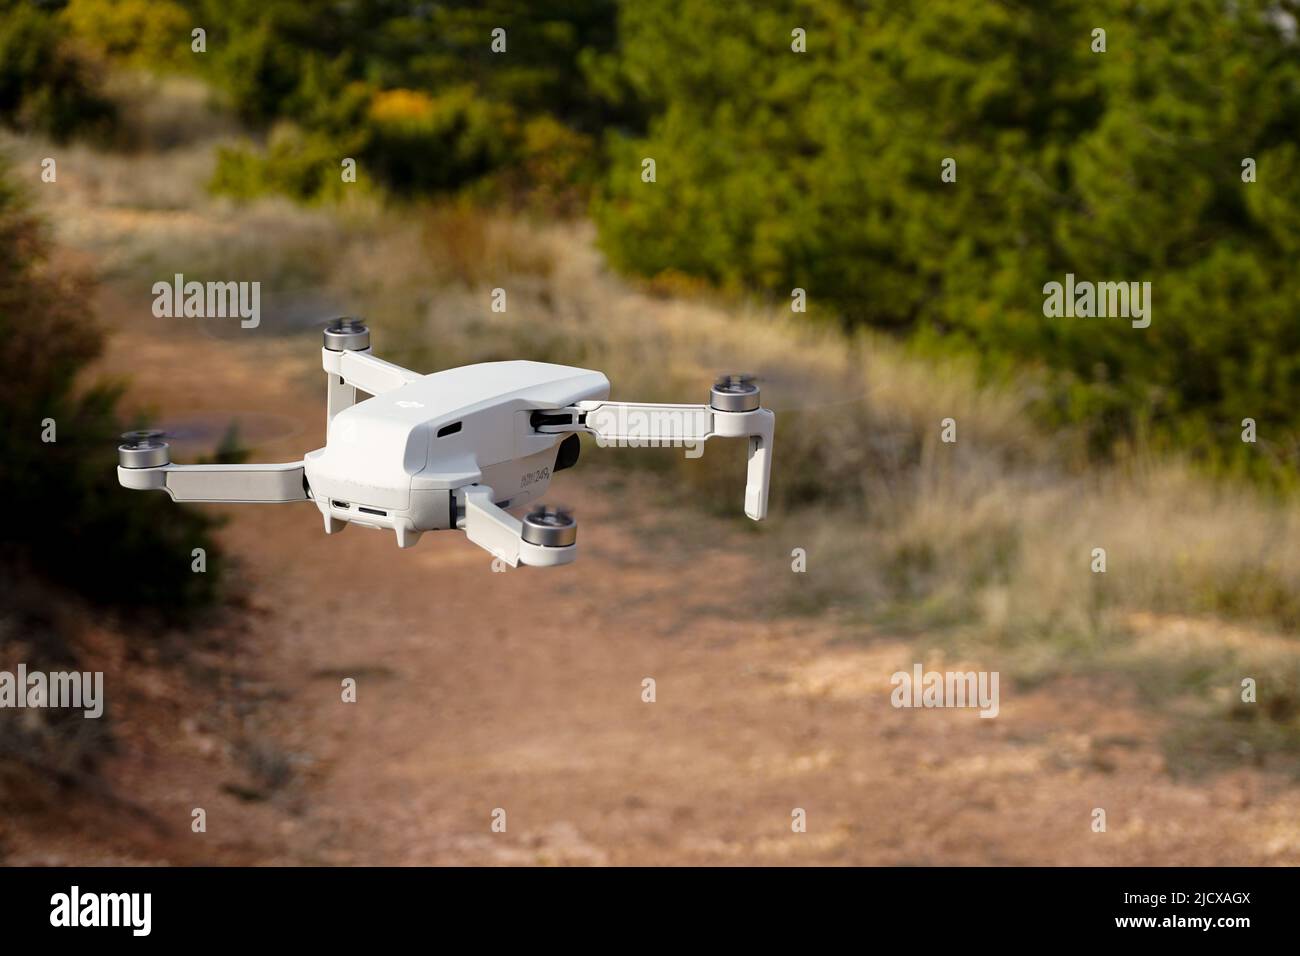 29 Dezember 2020 Eskisehir Türkei. DJI Mavic Mini Air Drohne in der Luft Nahaufnahme Stockfoto